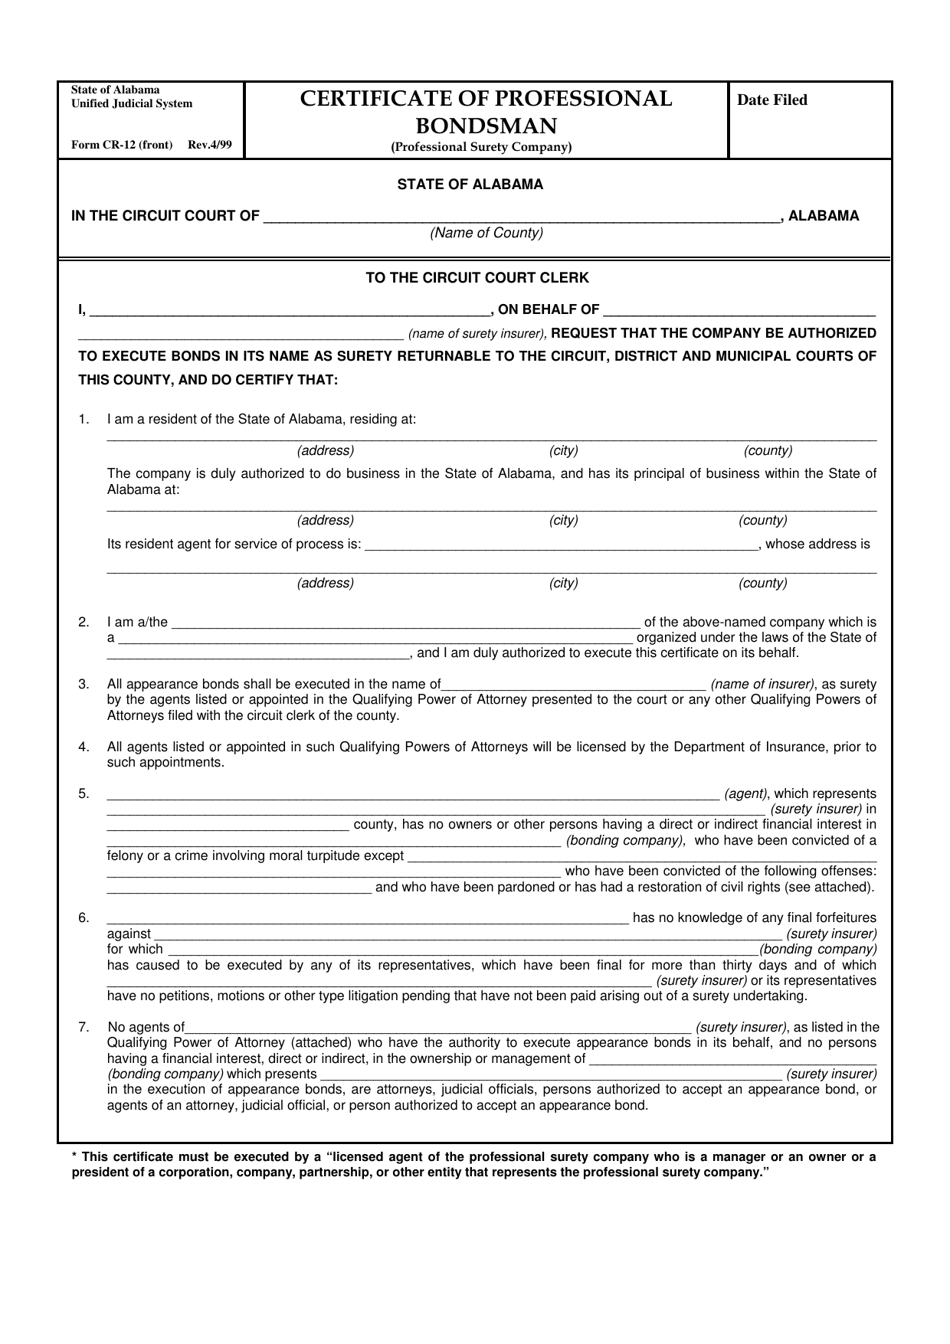 Form CR-12 Certificate of Professional Bondsman (Professional Surety Company) - Alabama, Page 1